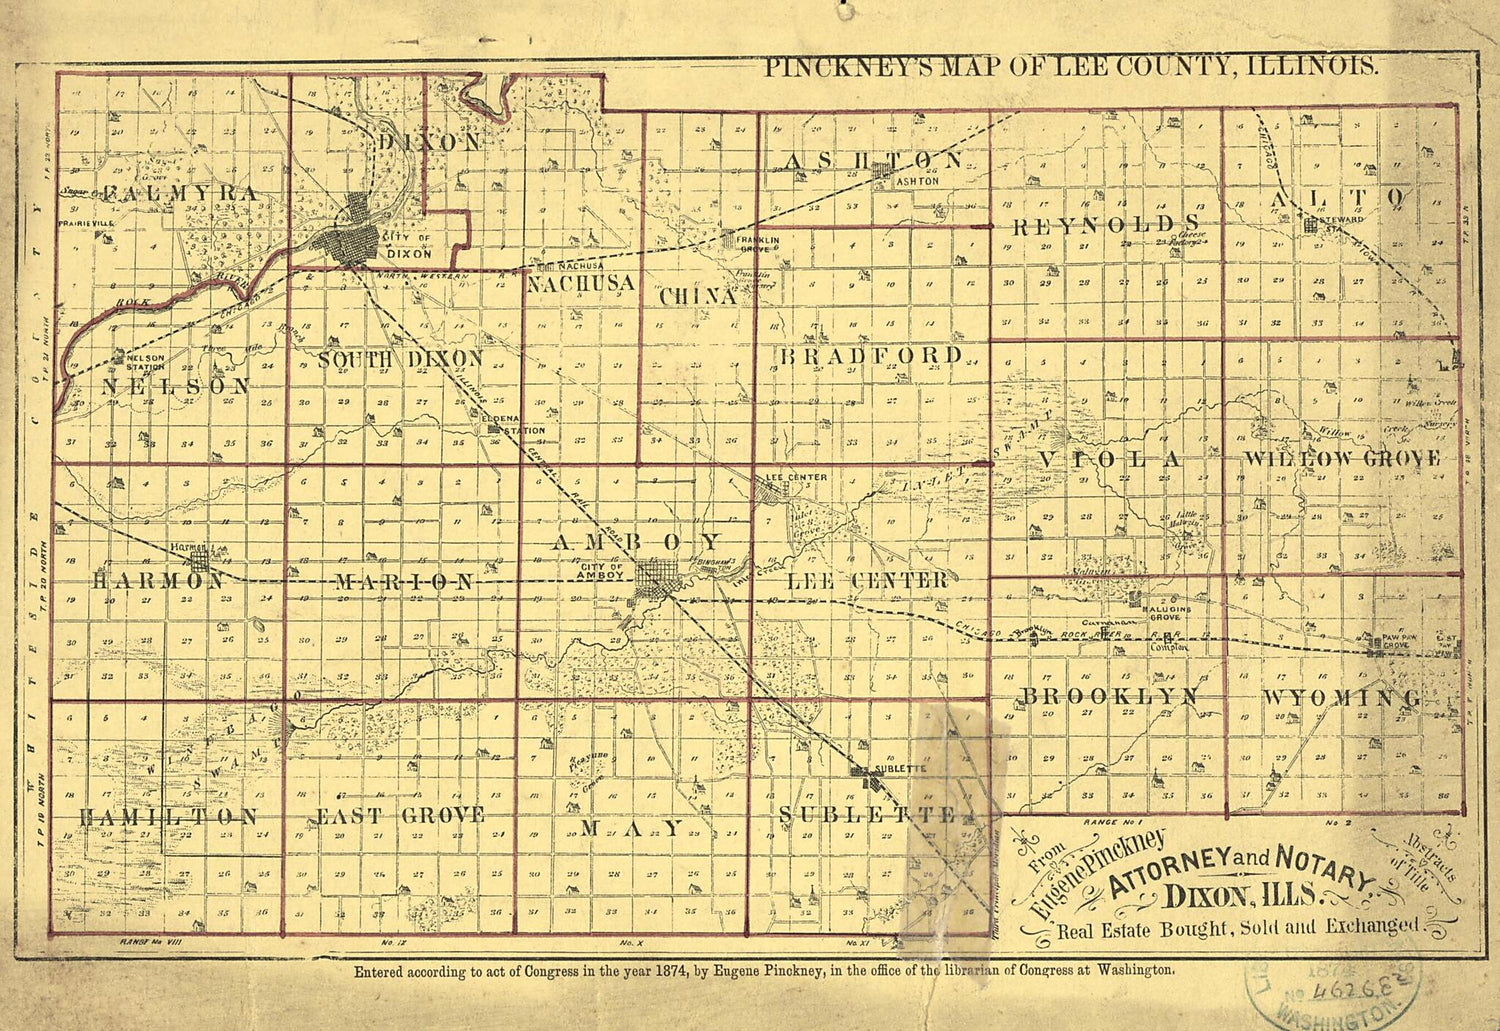 This old map of Pinckney&